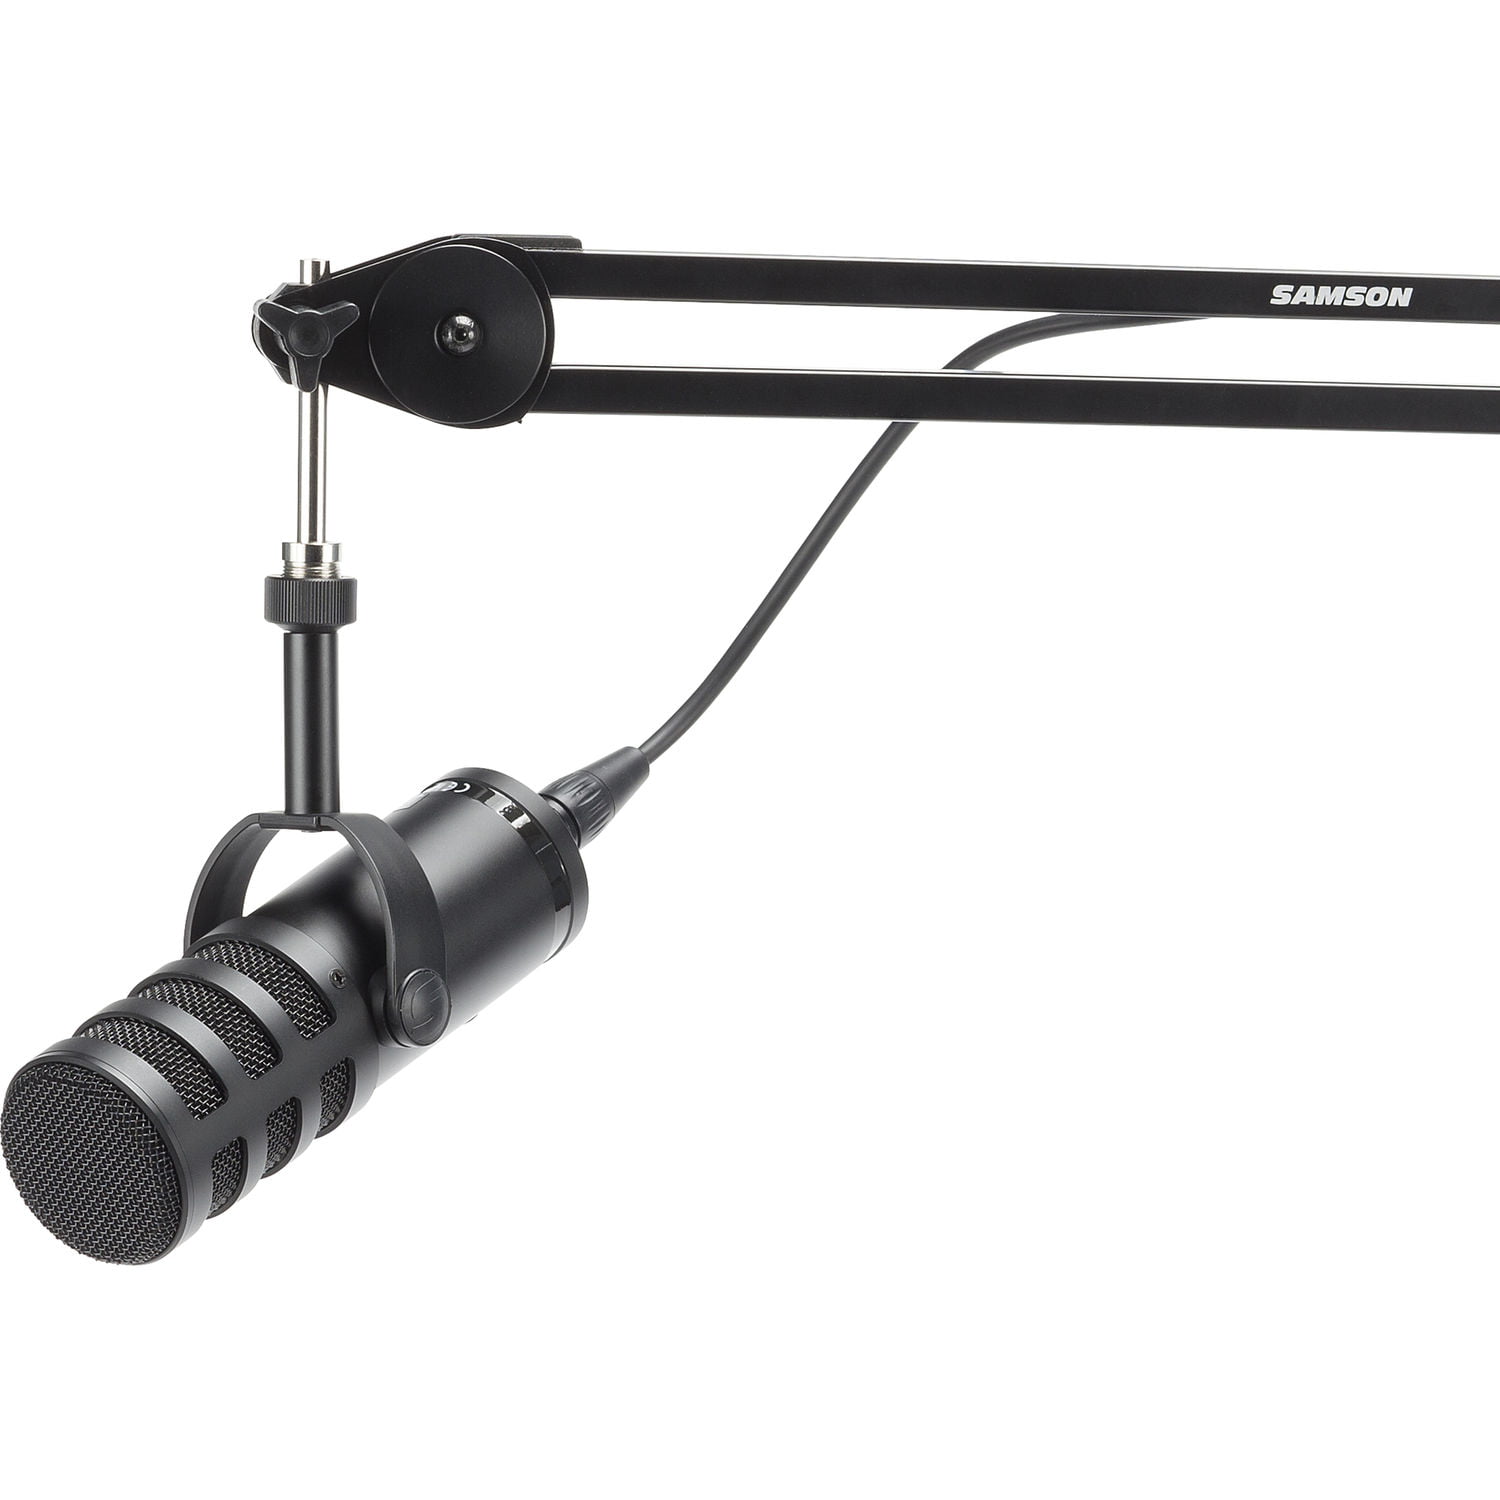 Samson Q9U XLR/USB Dynamic Broadcast Microphone + Desk Microphone Stand +  Mic Cable + Cleaning Cloth